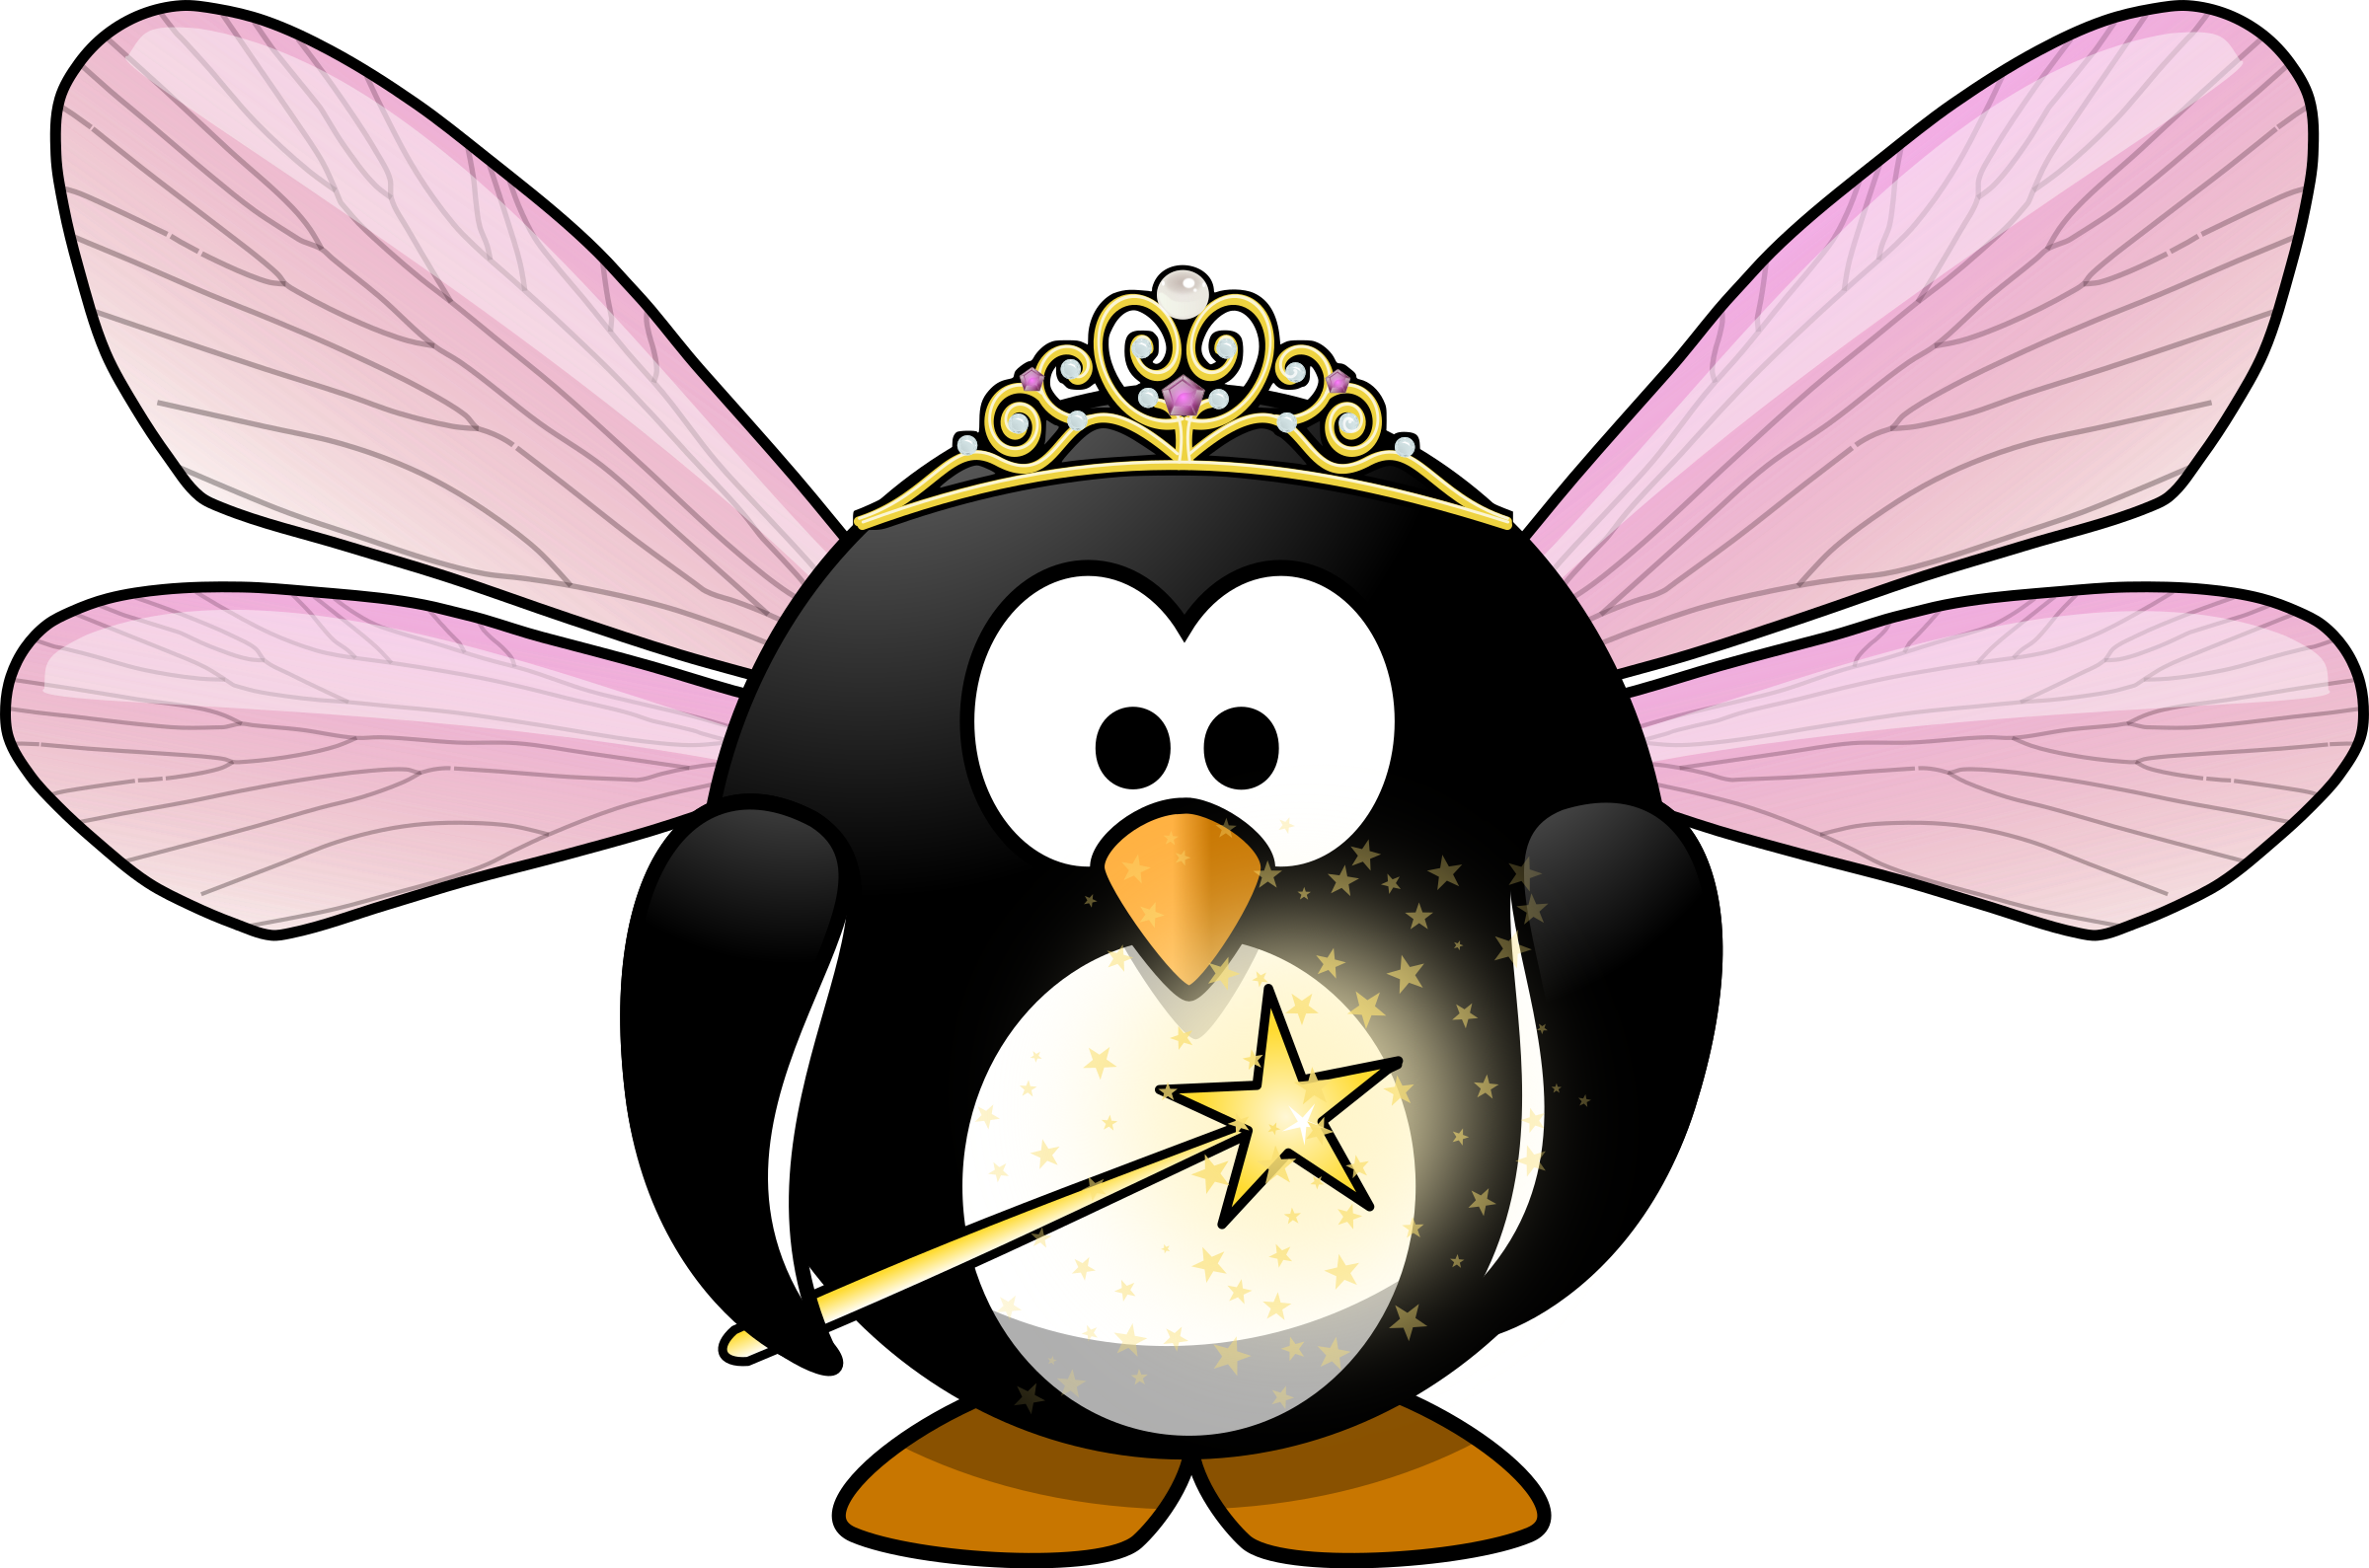 Fairy Penguin - Penguin Fairy (2400x1589)